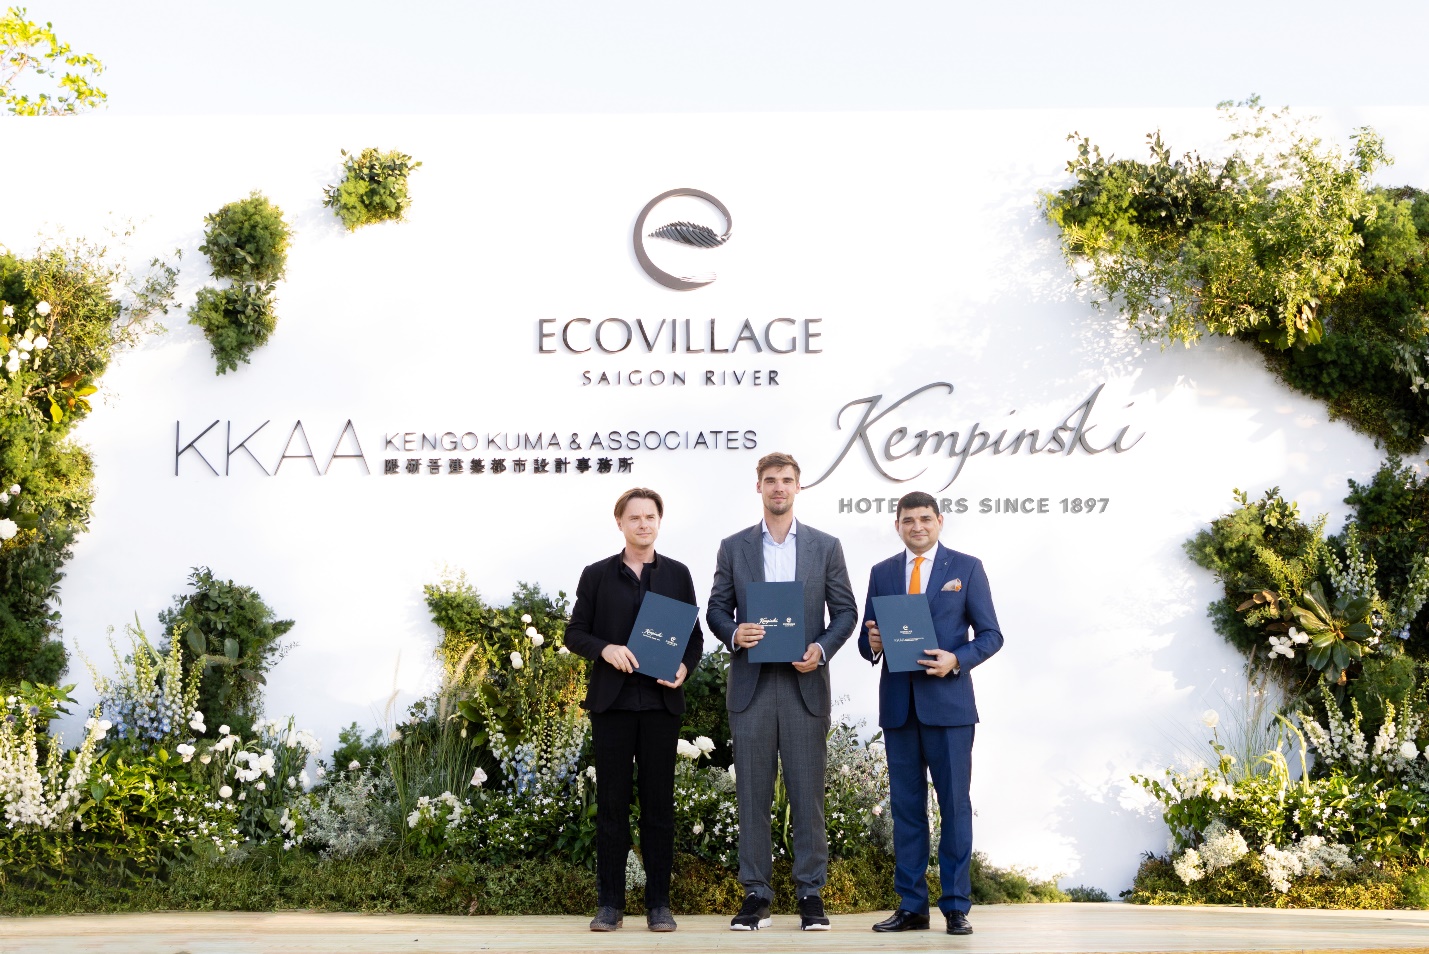 Đại diện Kengo Kuma &amp; Associates, Ecovillage Saigon River, Kempinski Hotels tại lễ kí kết hợp tác hôm 28/4